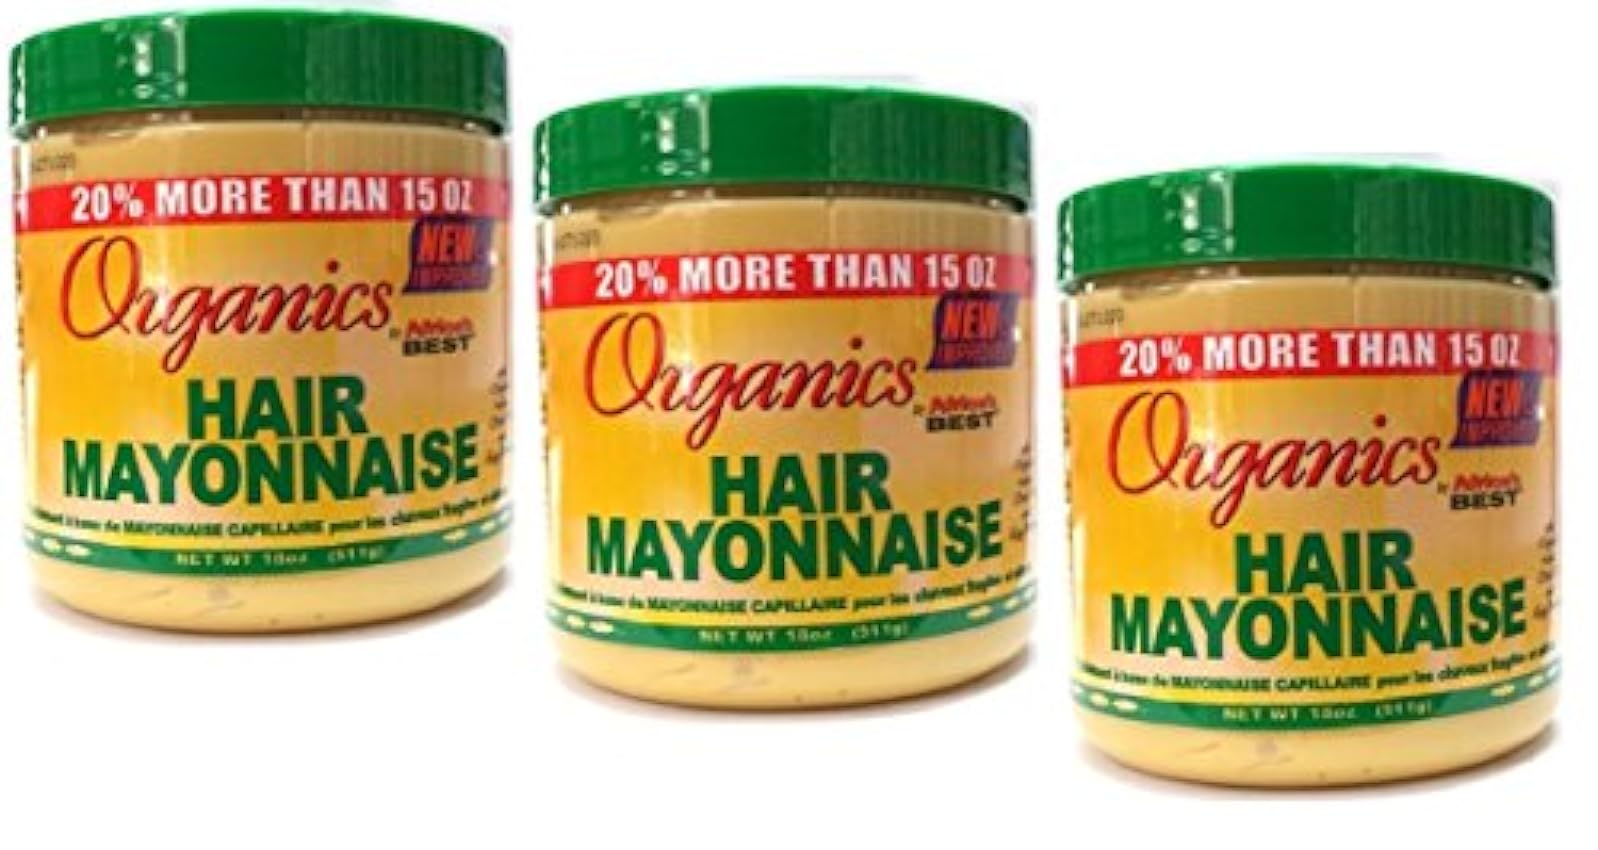 Africa´s Best Organics Hair Mayonnaise - 3 paquetes de 426 g (total - 1,278 g) iM1cIjMy